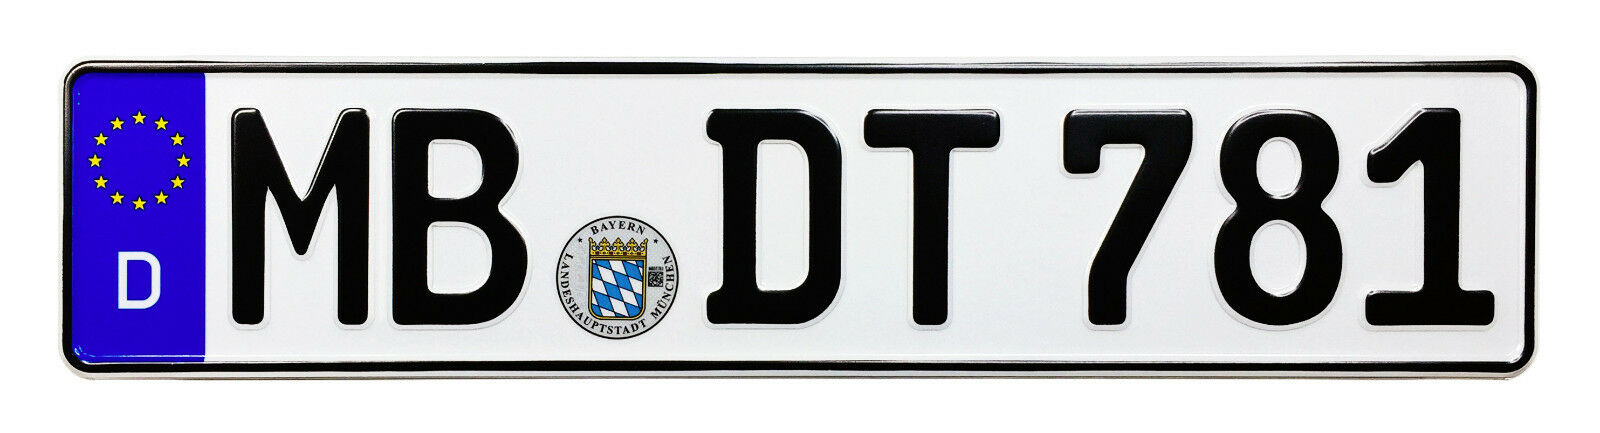 New European German License Plate #mb Dt 781 For Bmw Vw Mercedes Porsche Audi